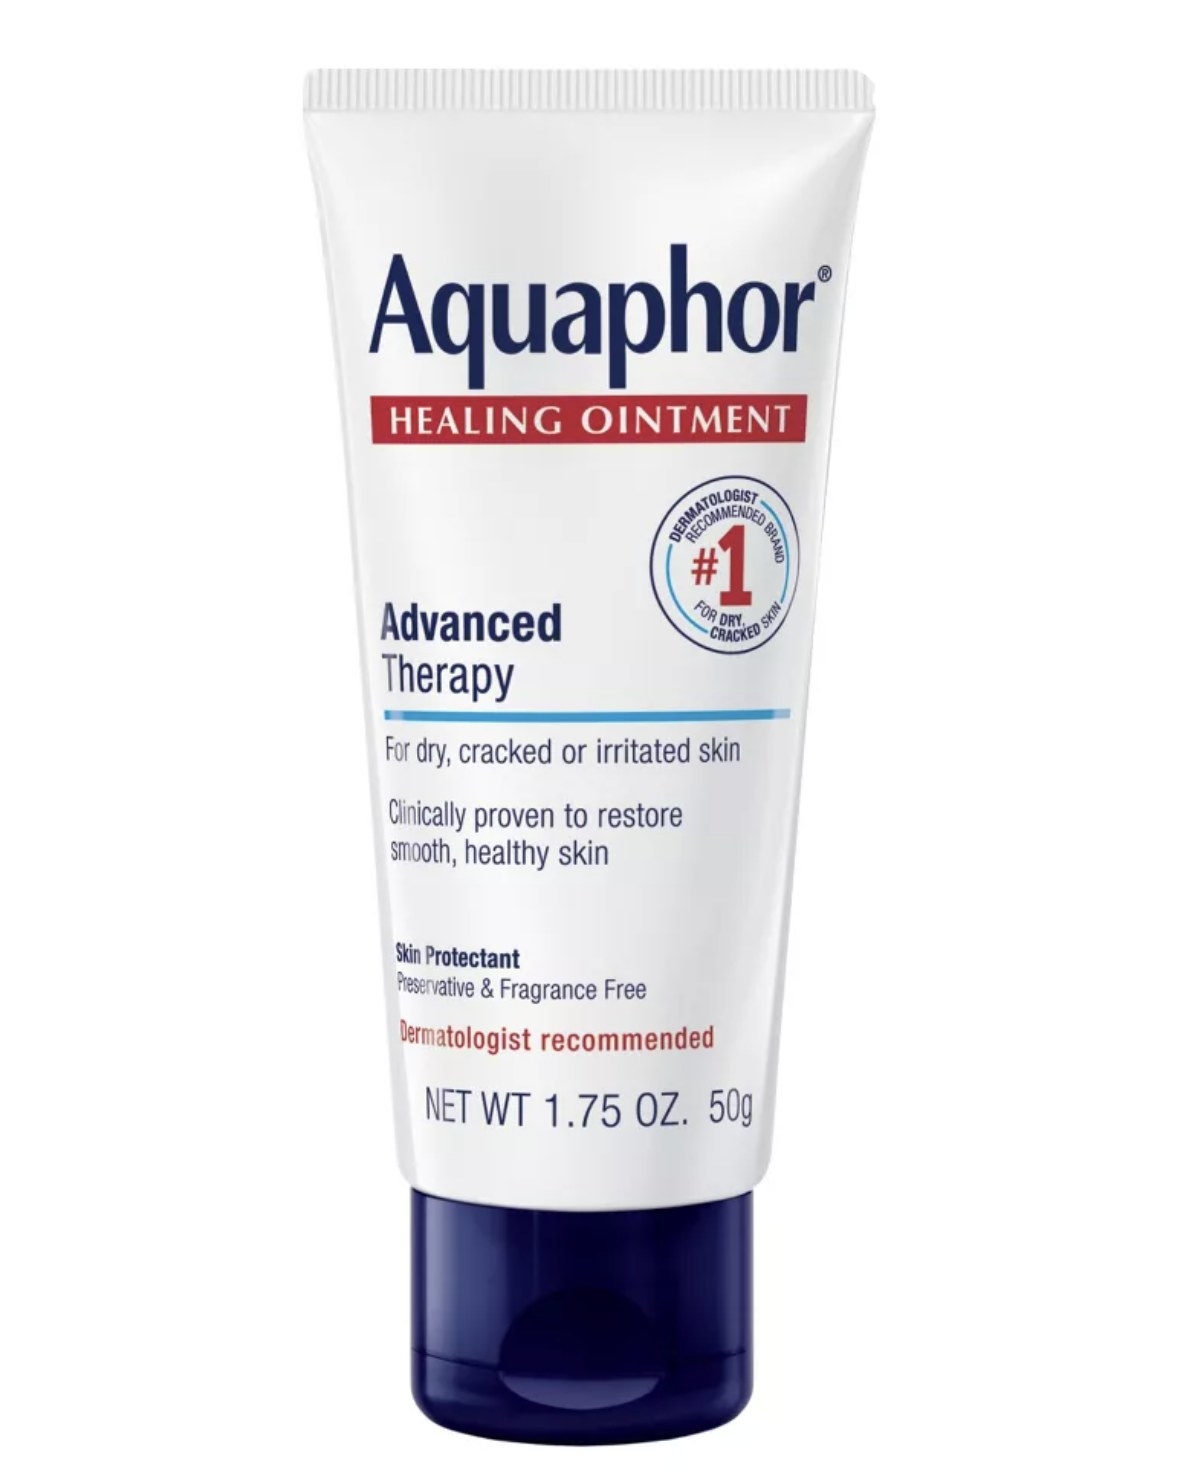 aquaphor in its tube